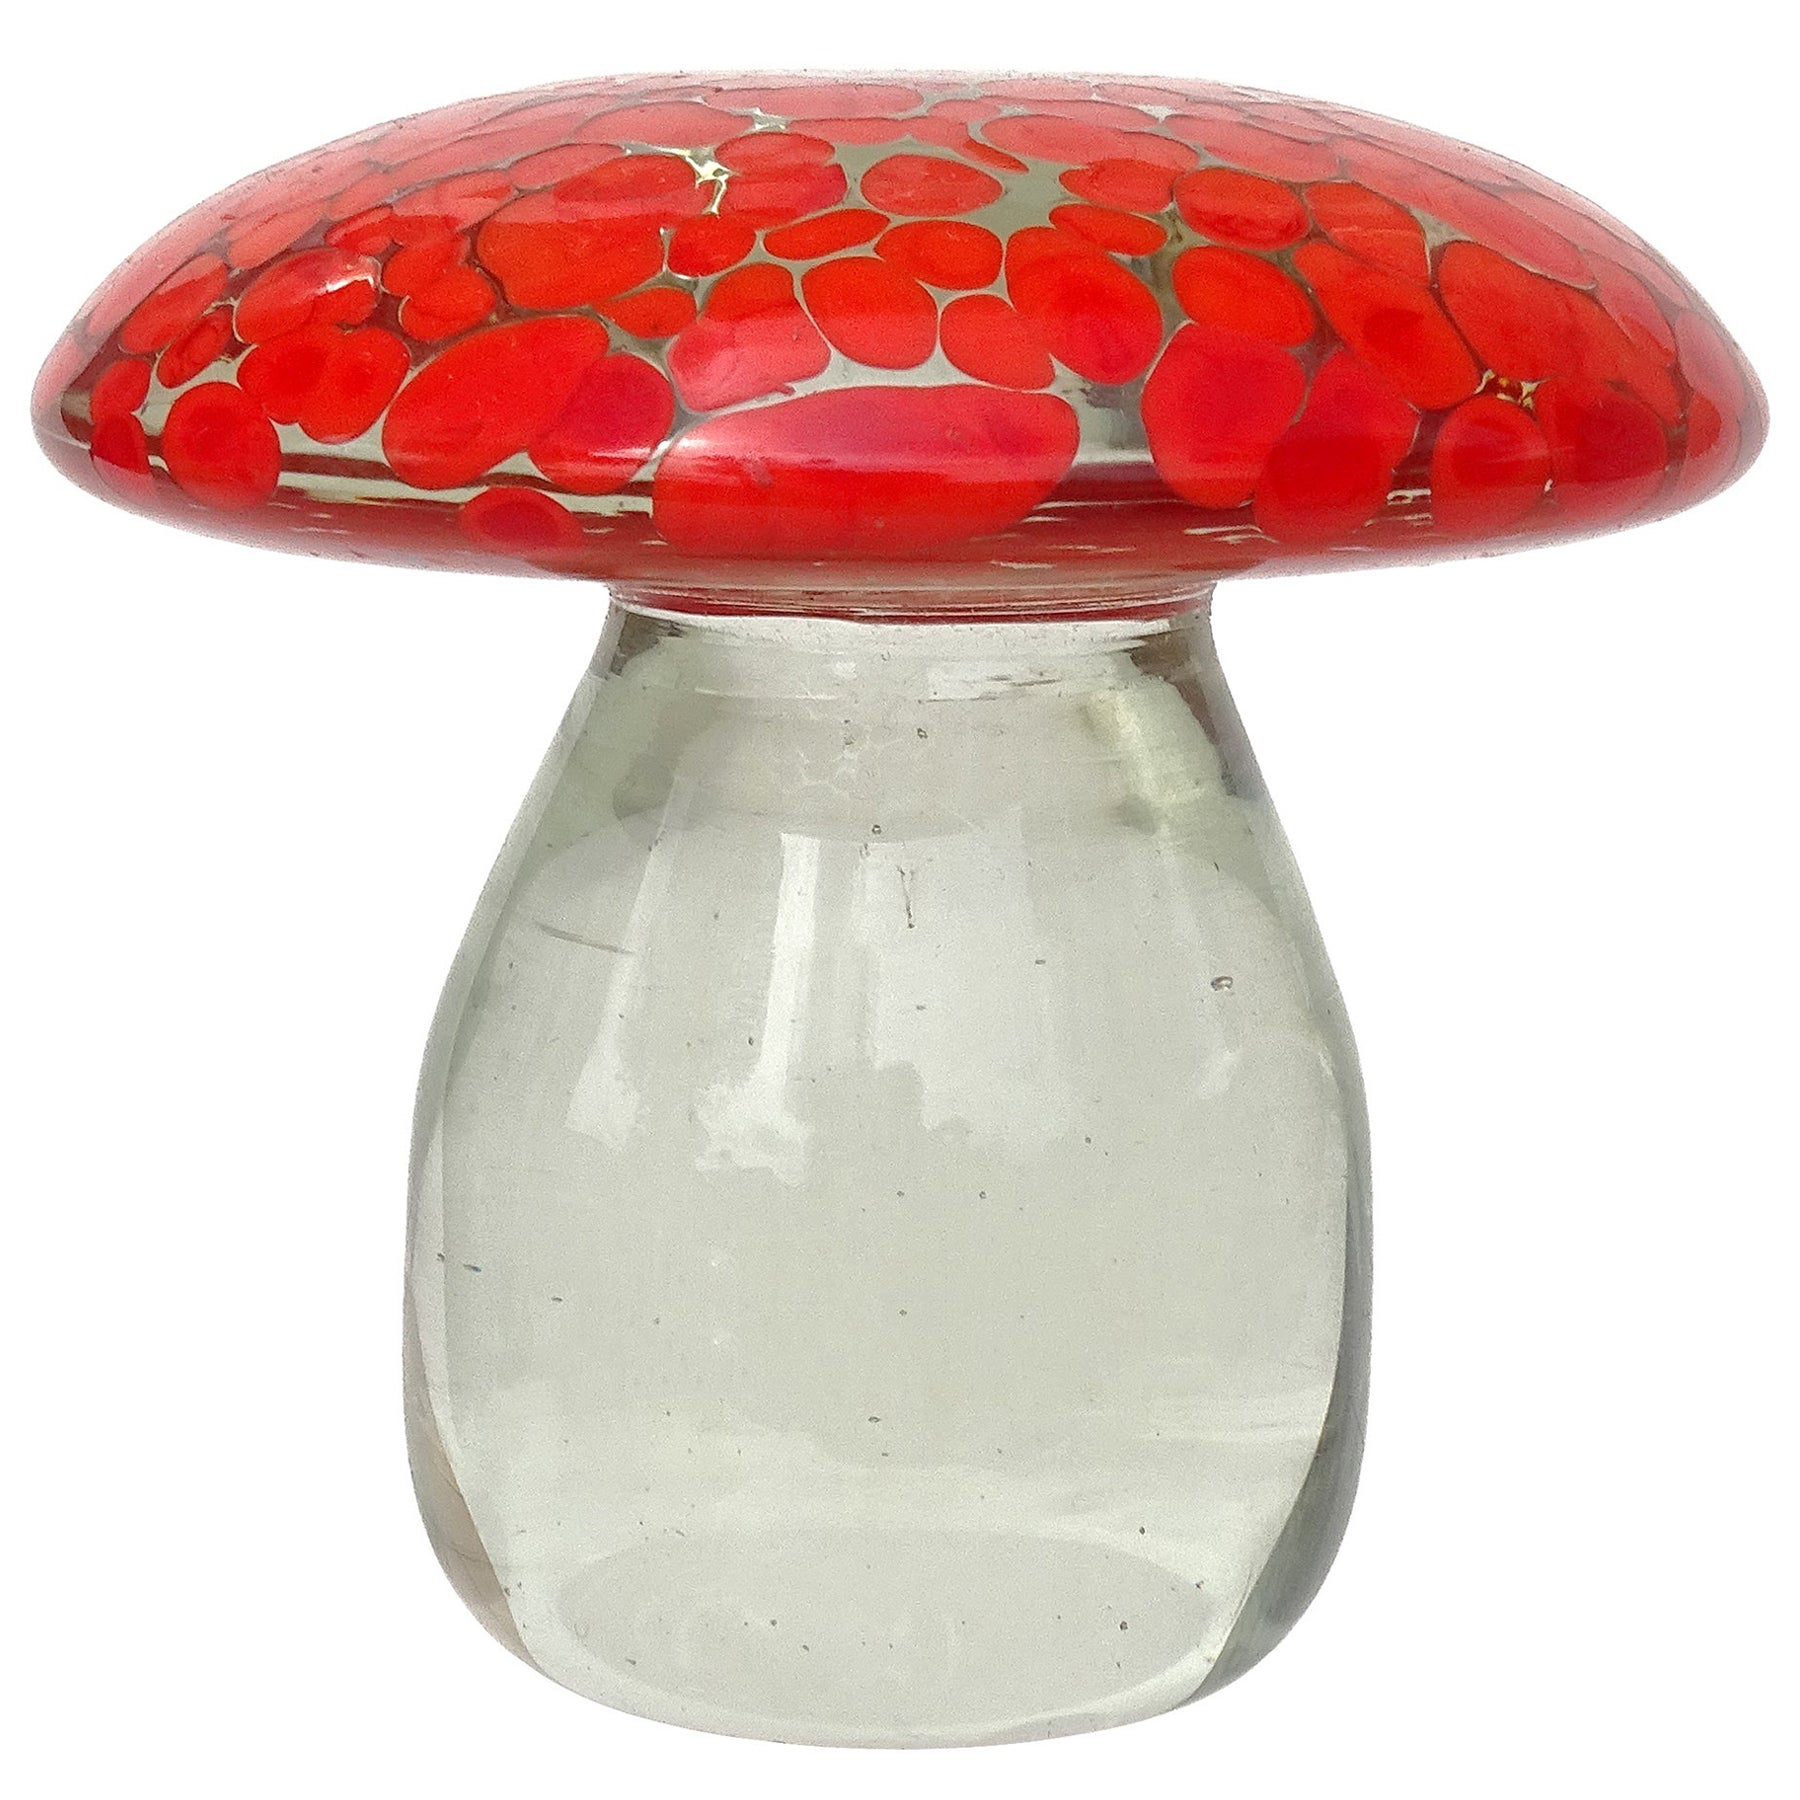 Presse-papiers figurine de tabouret champignon en verre d'art italien de Murano rouge orangé en vente